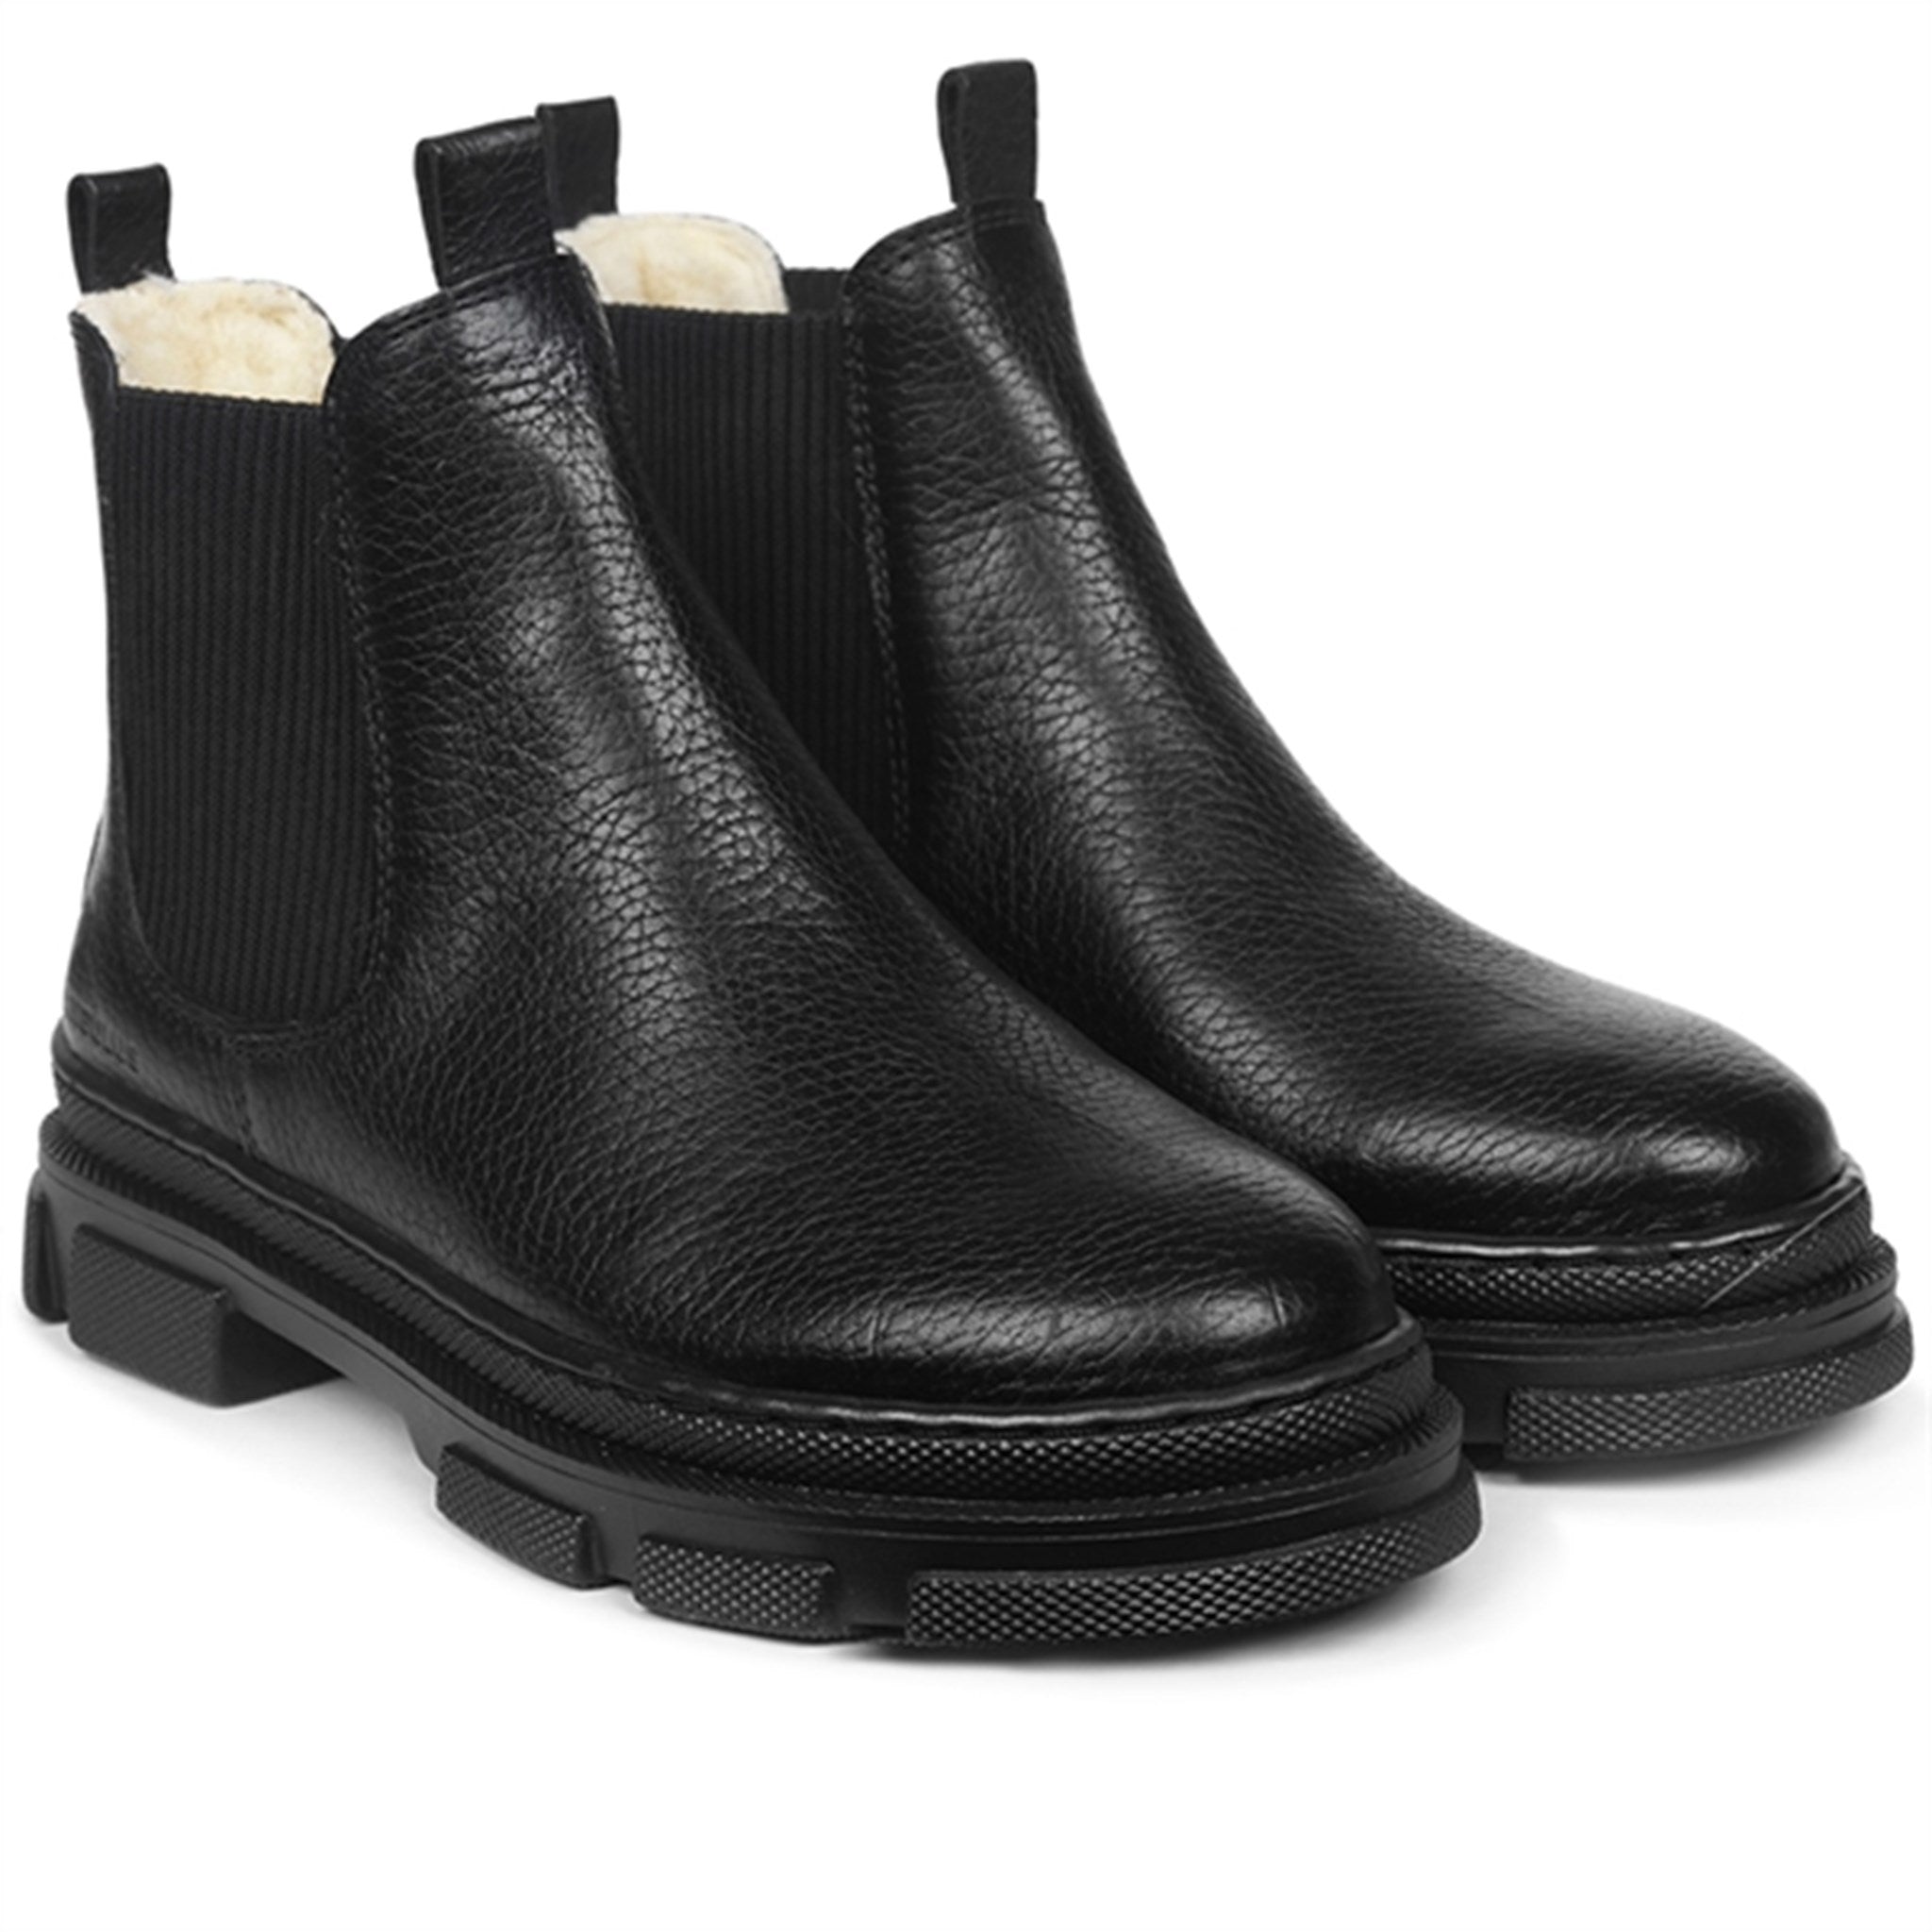 Angulus Boots w Elastic and Wool Lining Black/Black